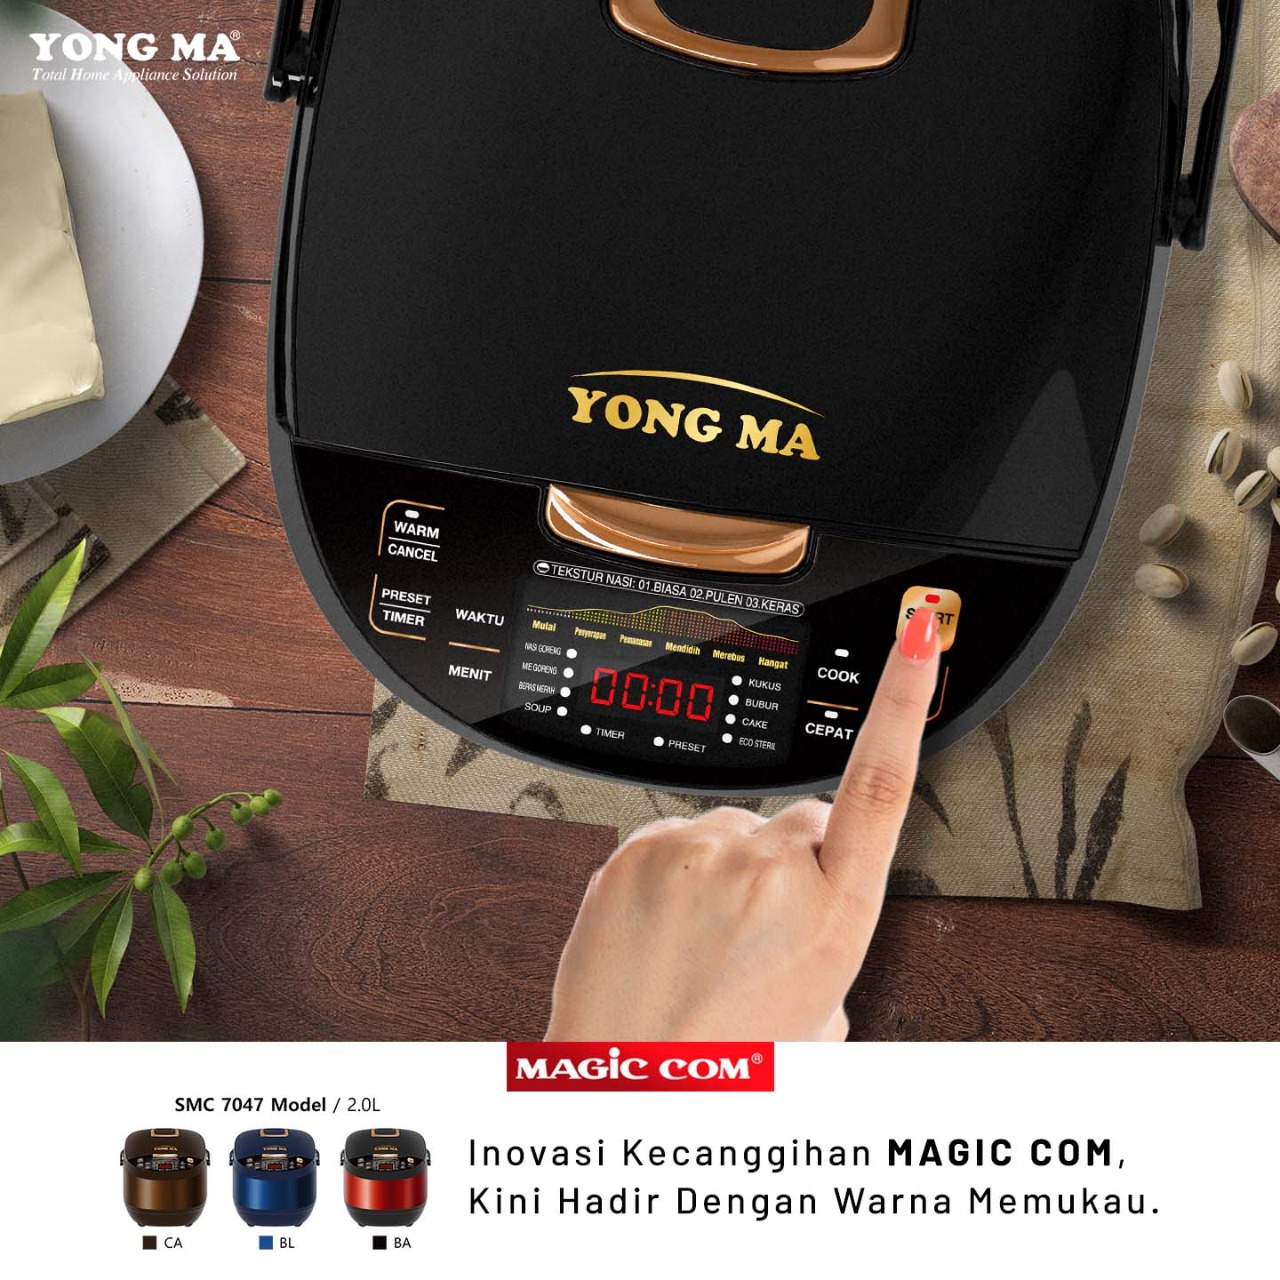 Yong Ma Digital Rice Cooker 2L - SMC7047N | SMC-7047N Brown